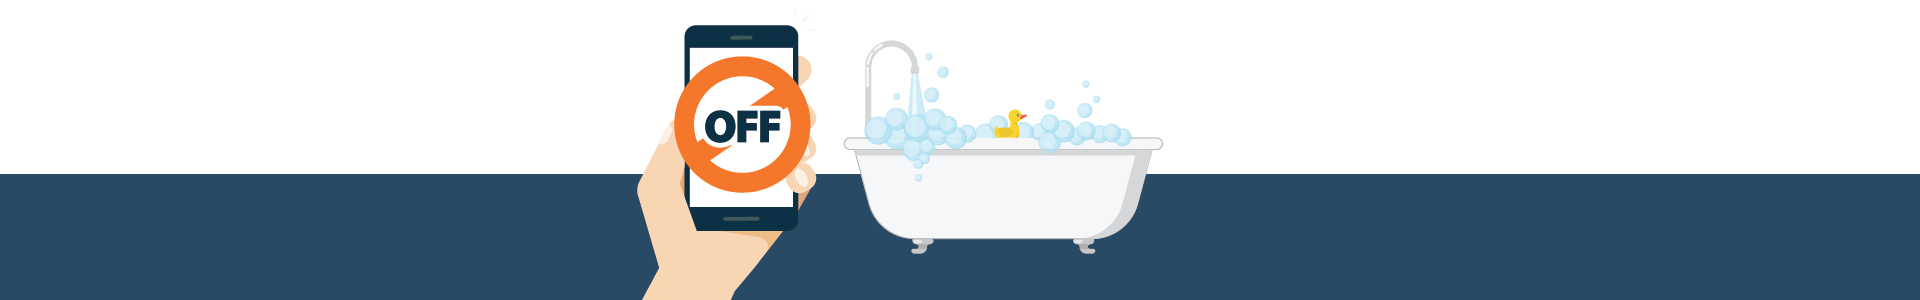 illustration of a Bubble Bath